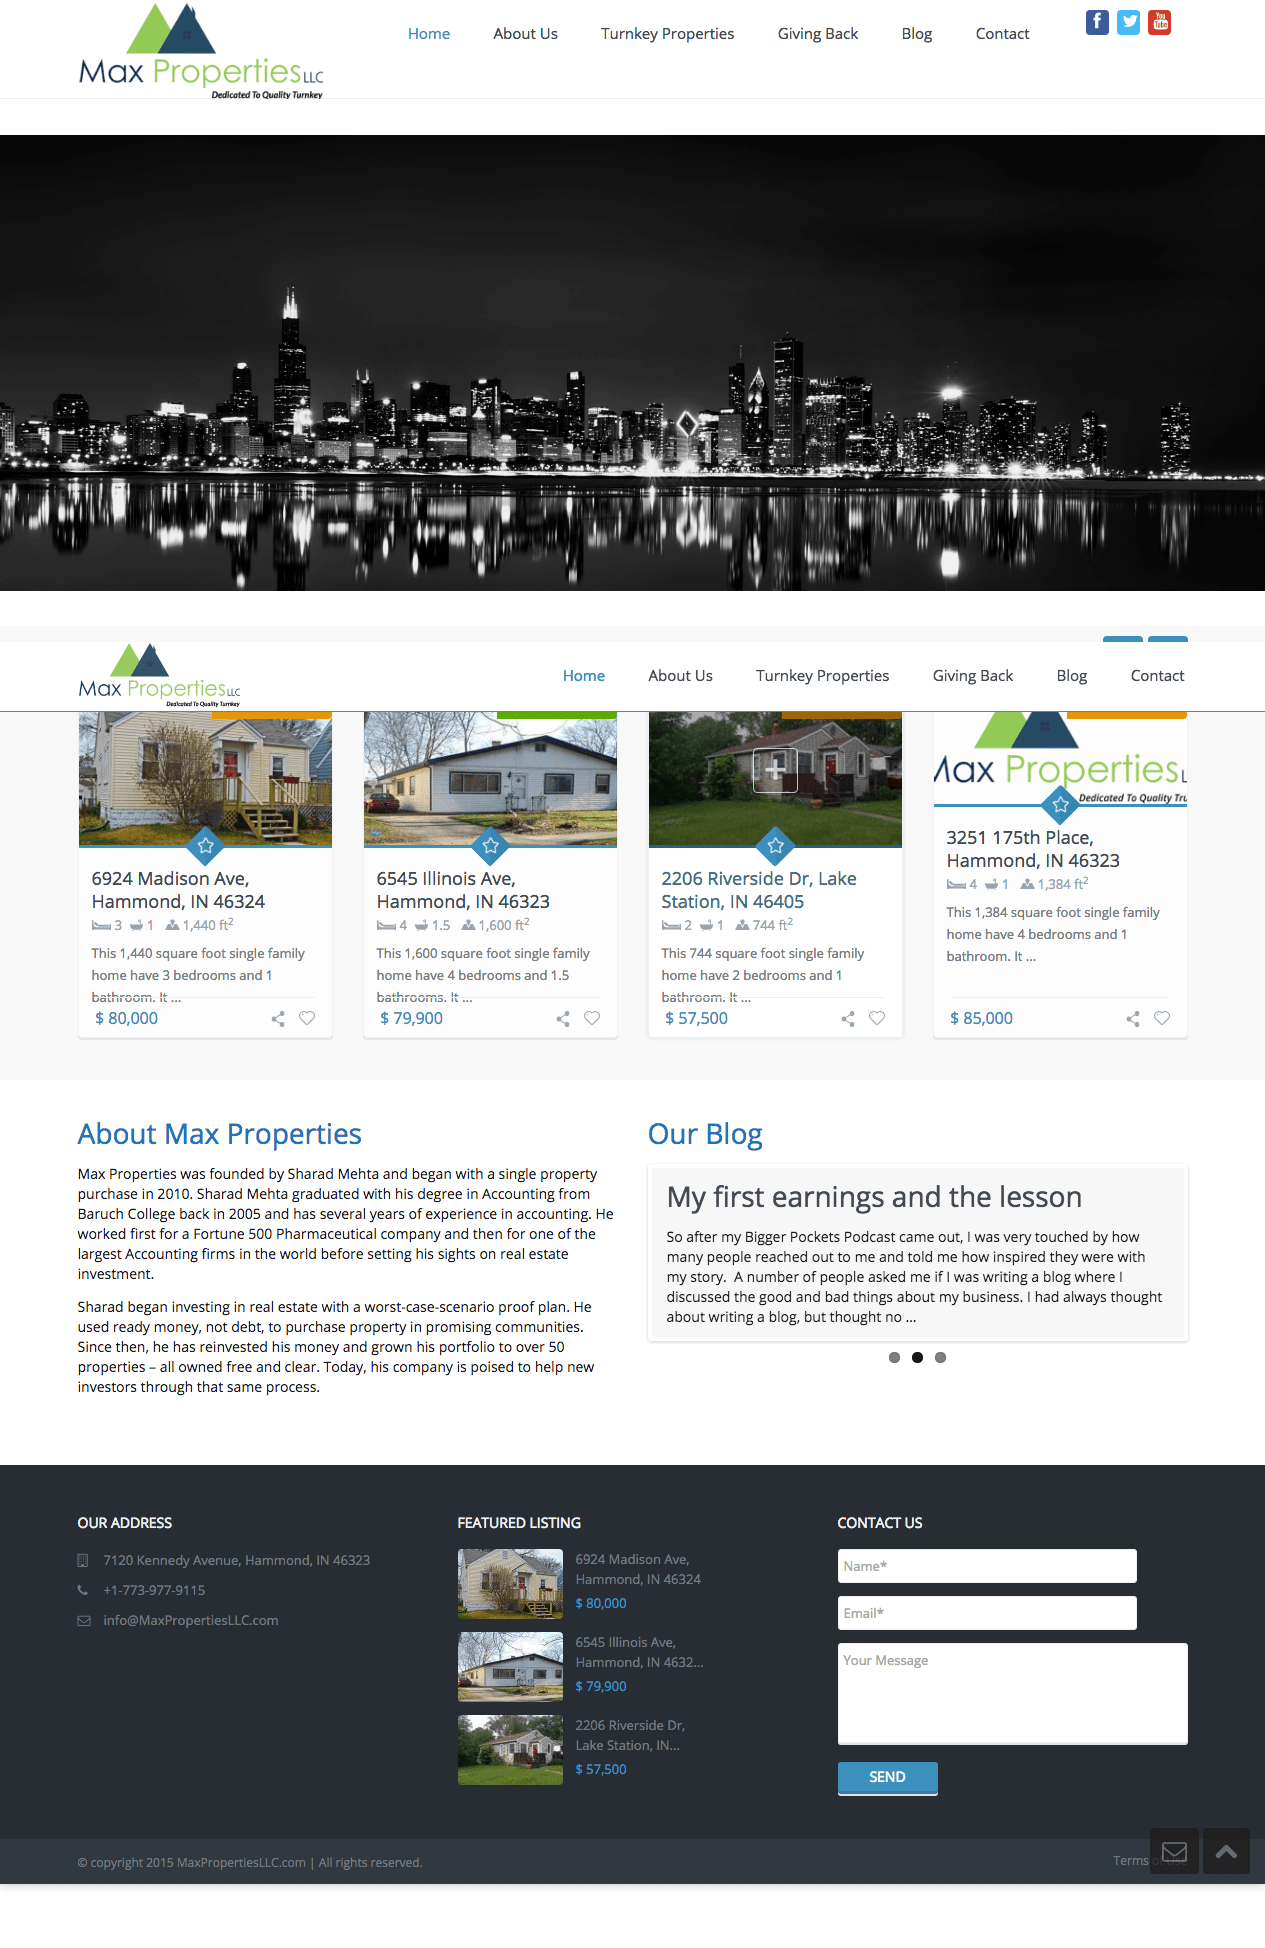 Digital4design - Web Development Company in Florida - Palm Harbor, FL, US, website design